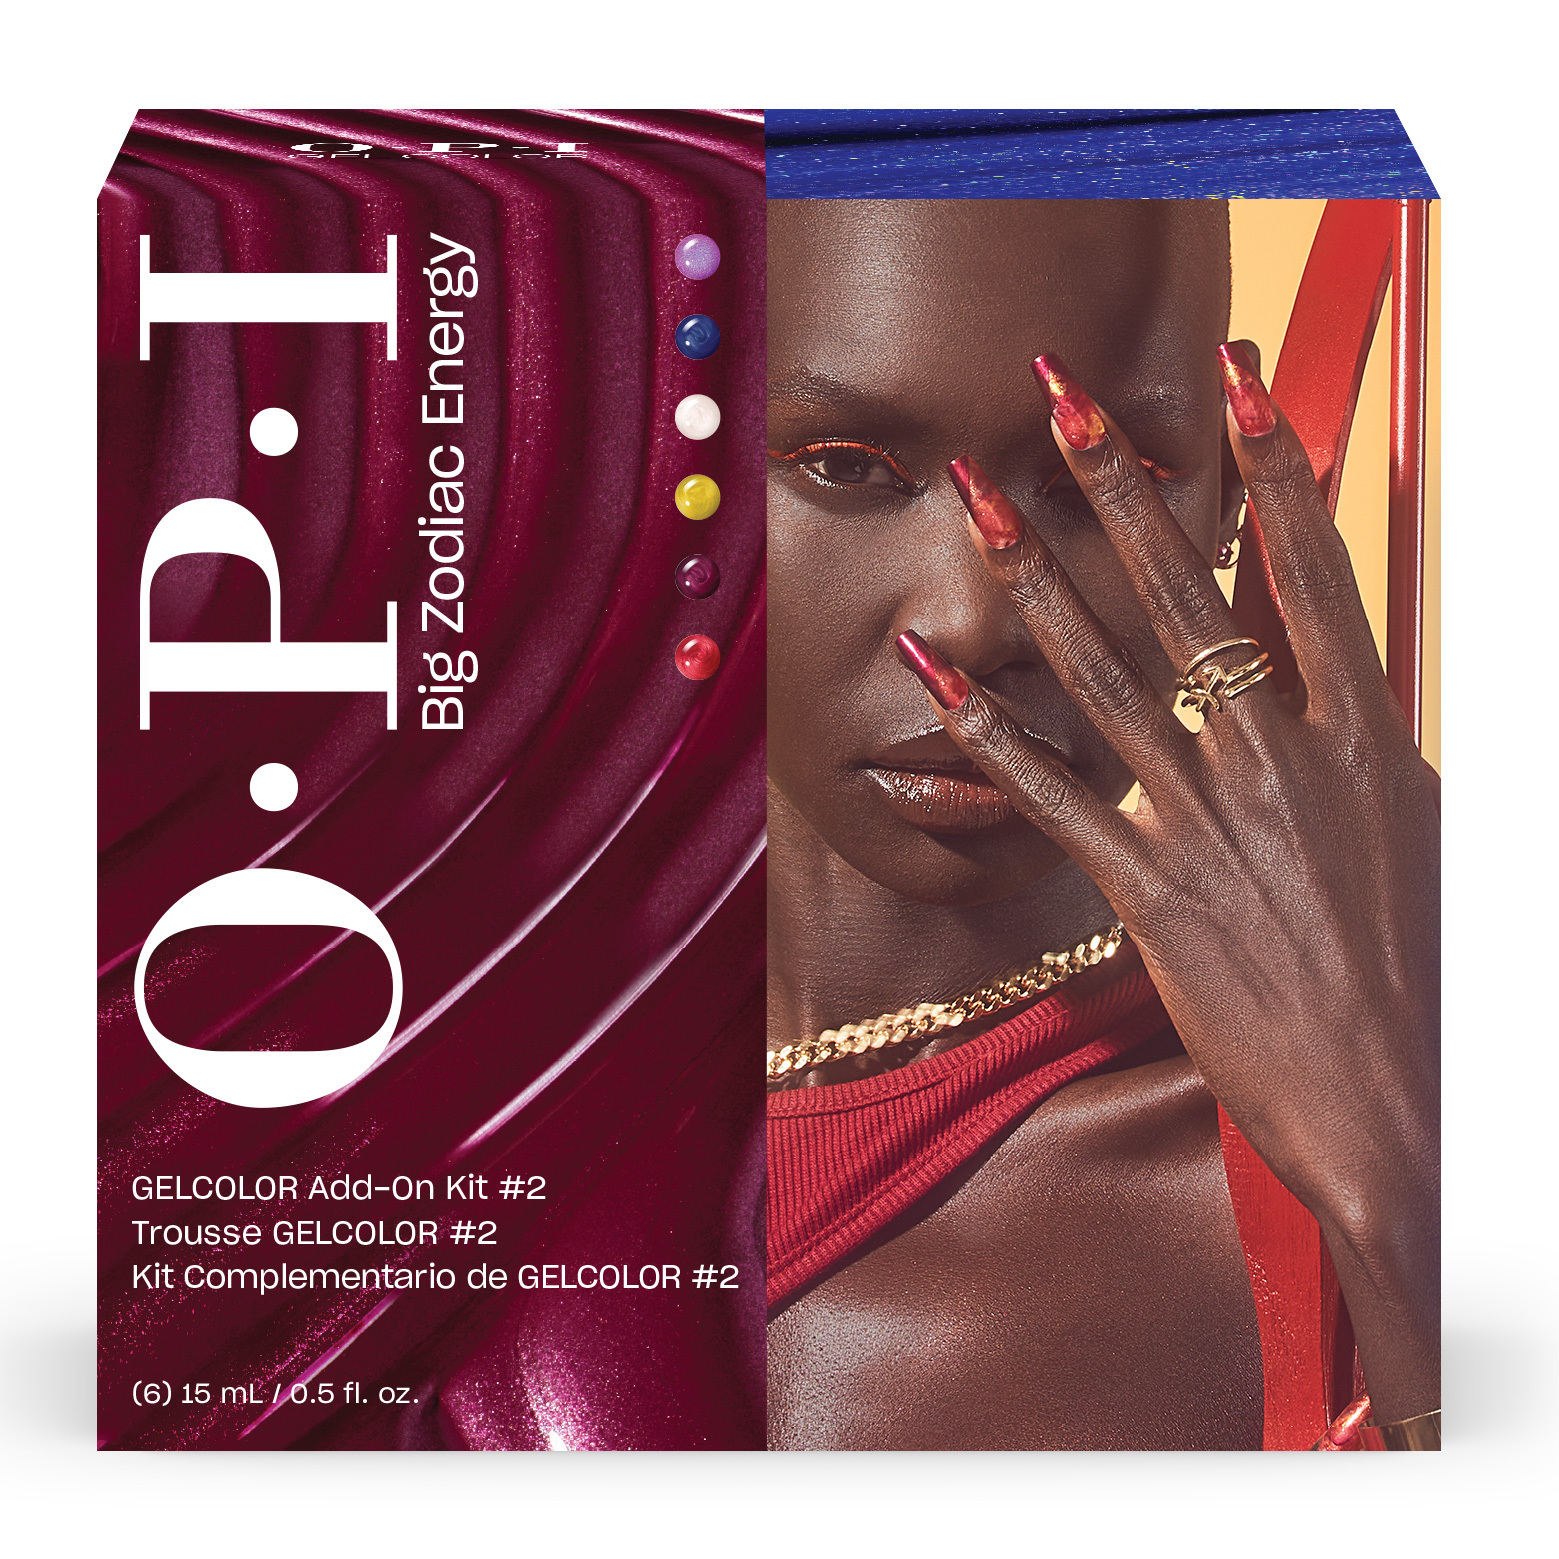 OPI Gelcolor 360 Add on Kit #2 - Big Zodiac Energy